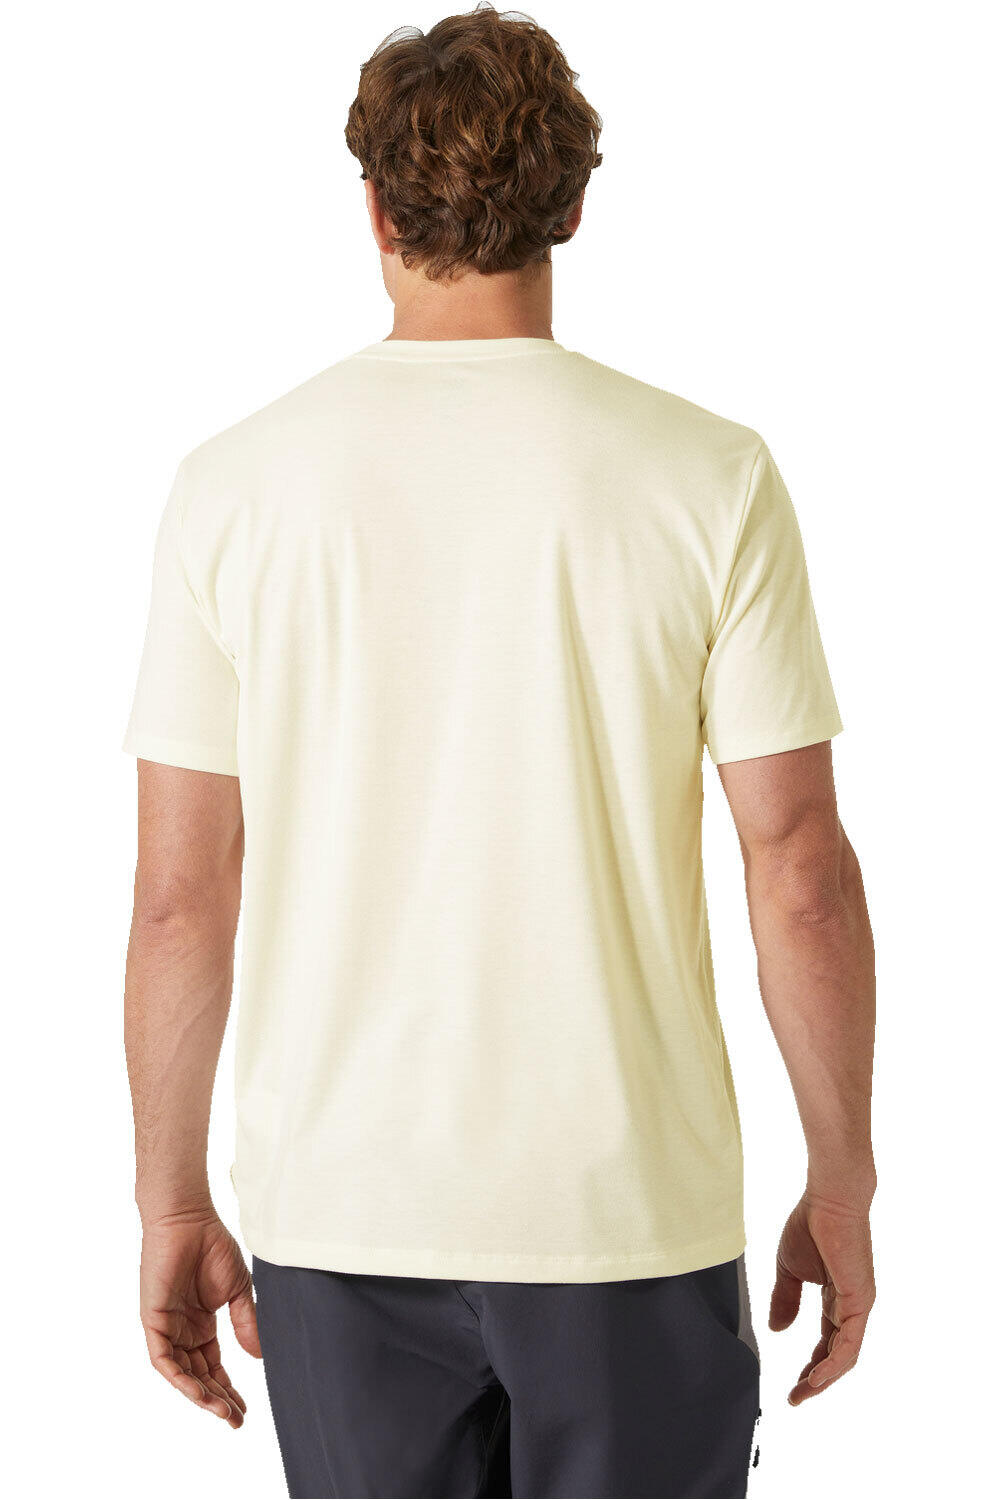 Helly Hansen camiseta montaña manga corta hombre SKOG RECYCLED GRAPHIC T-SHIRT vista trasera